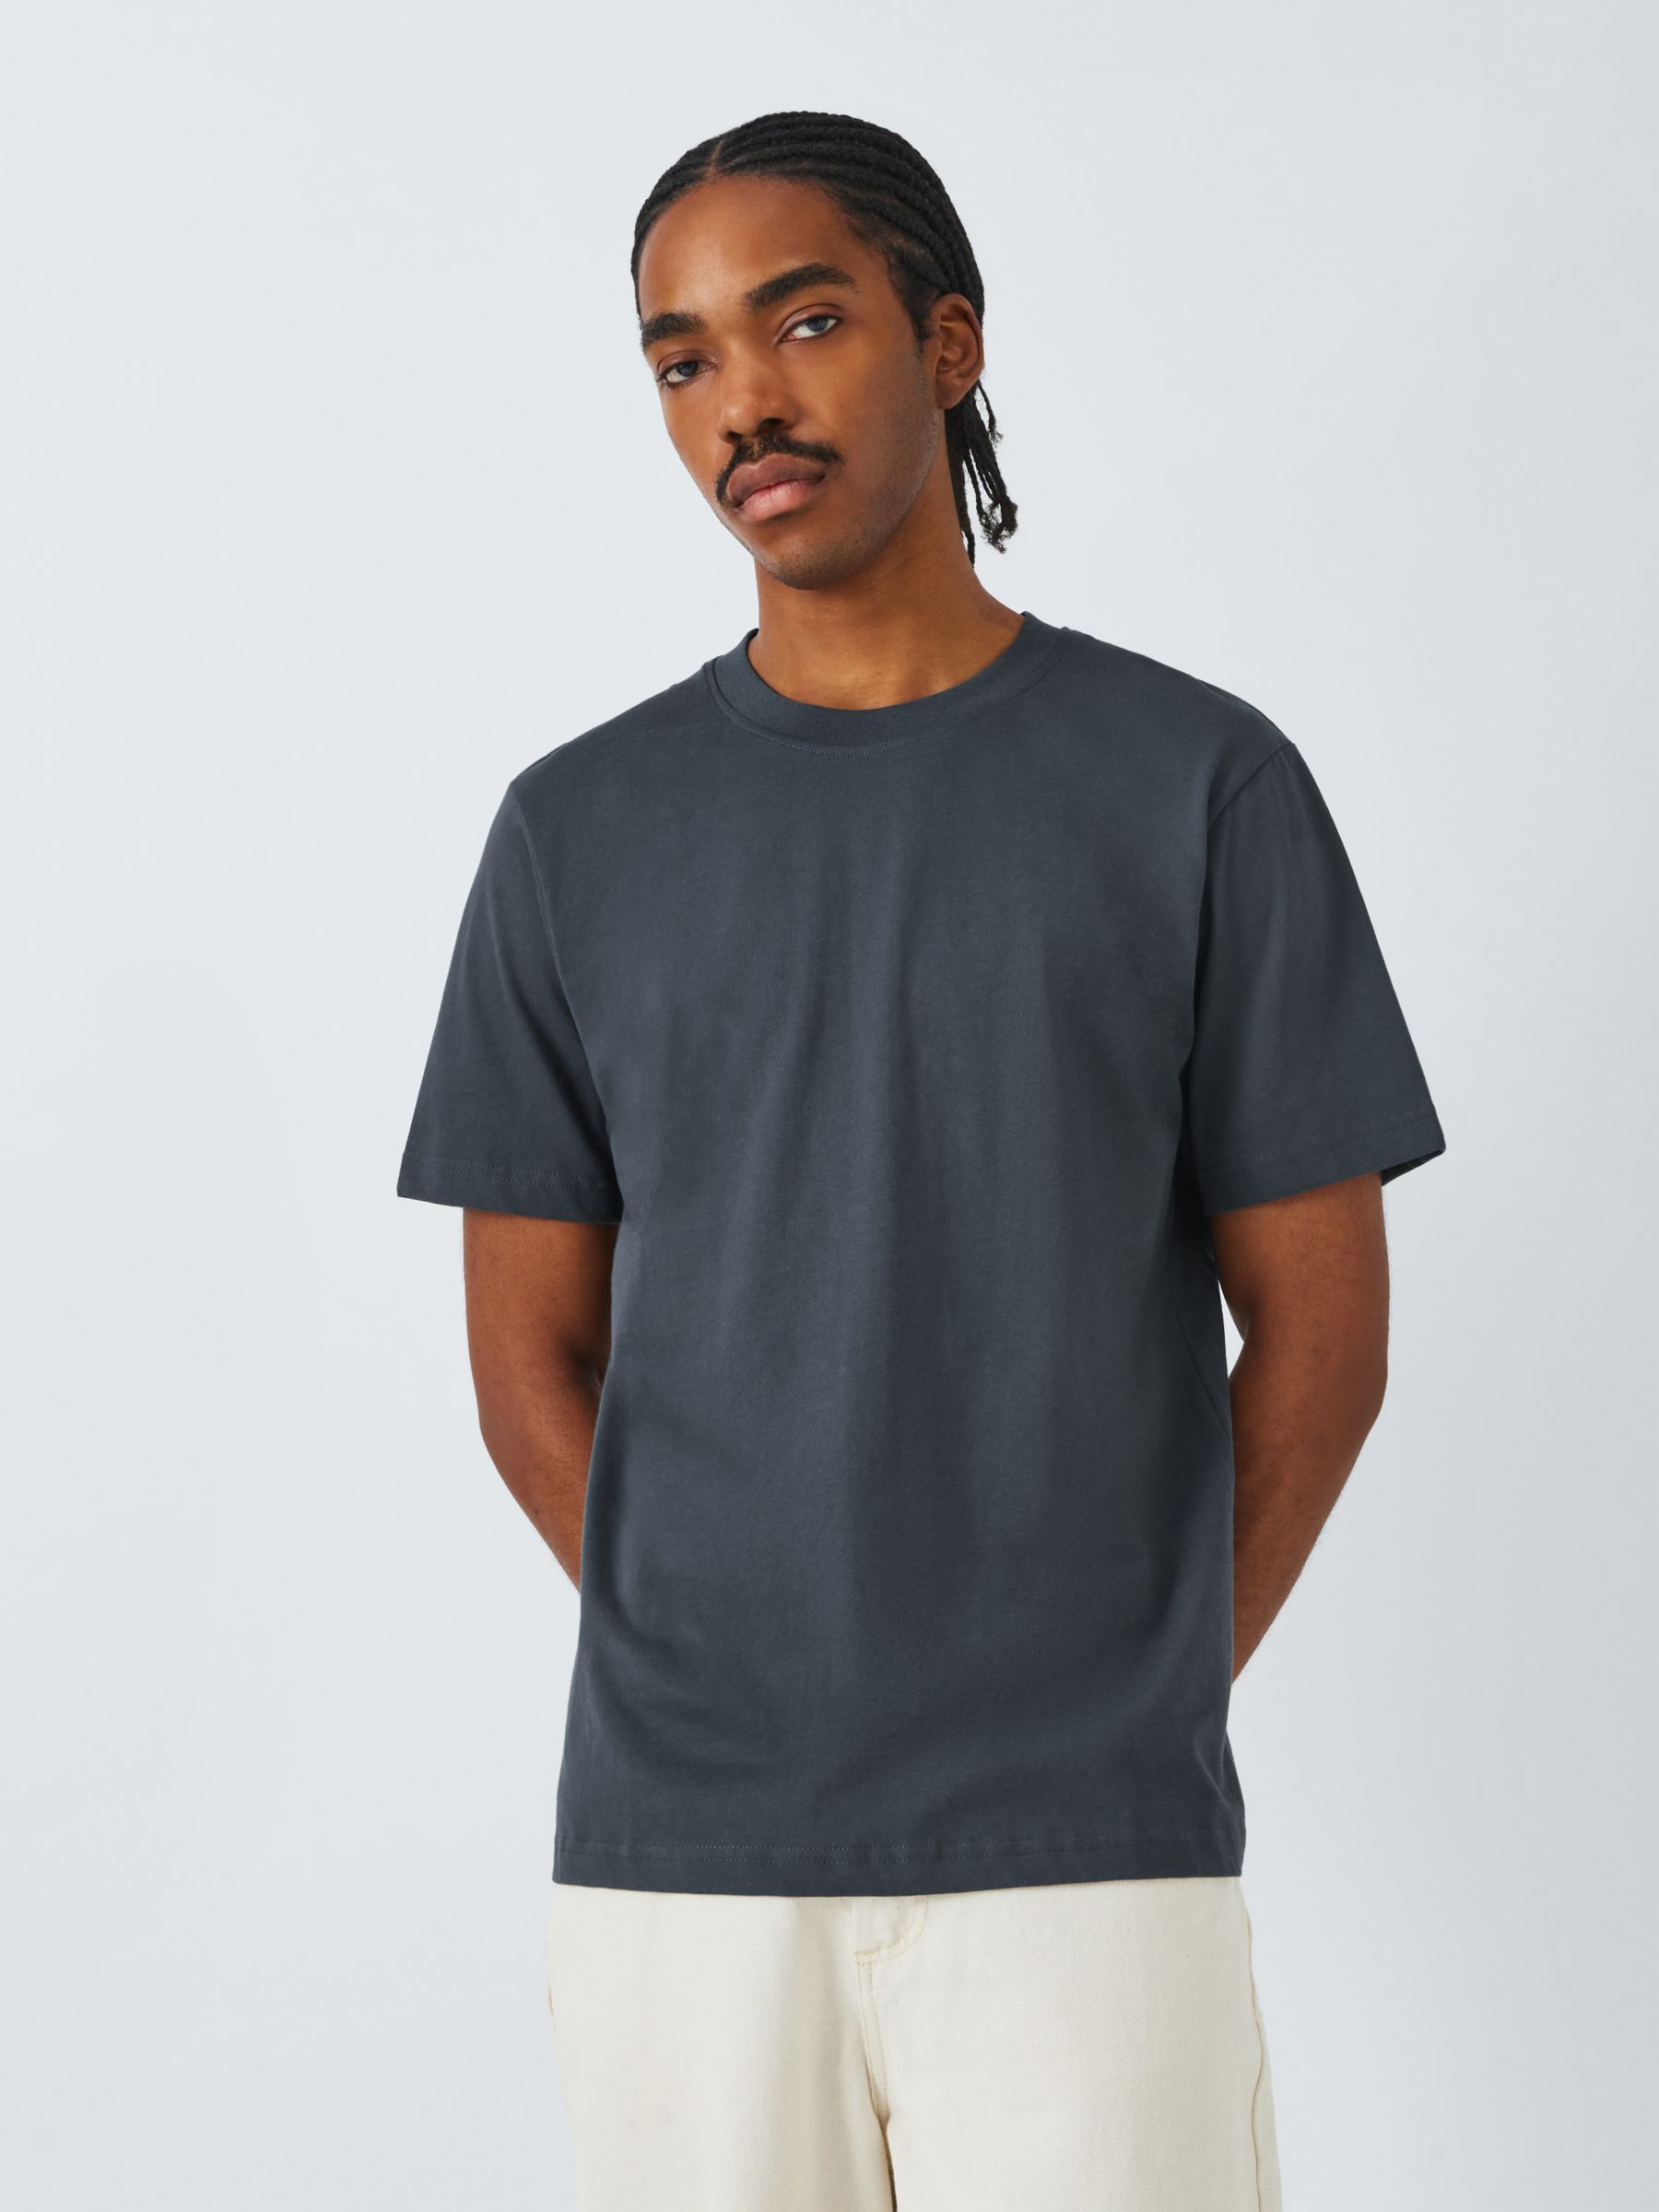 T-shirt Designer Clothes Men Mercerized Cotton V-shaped Pattern Rhinestone  Top 2022 New Male Street Fashion Style Man Clothing